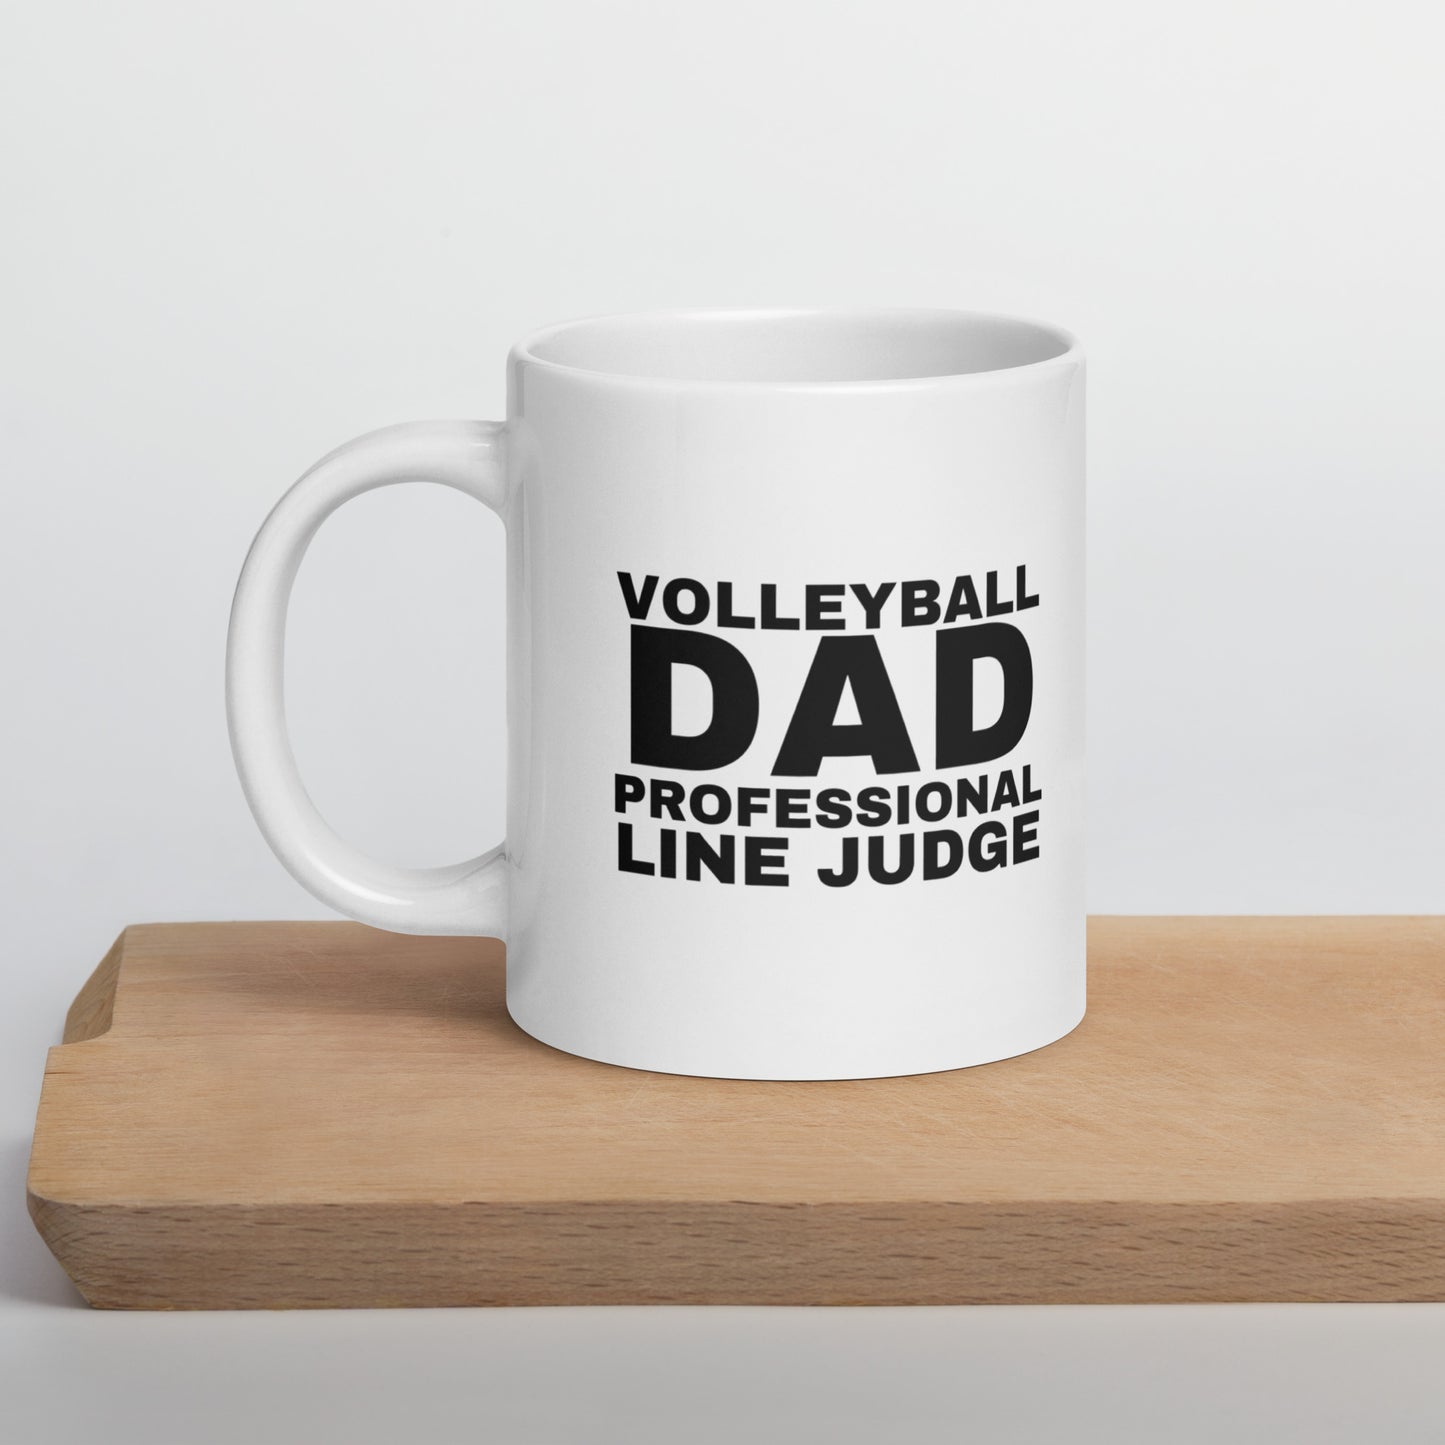 Volleyball Dad - White glossy mug